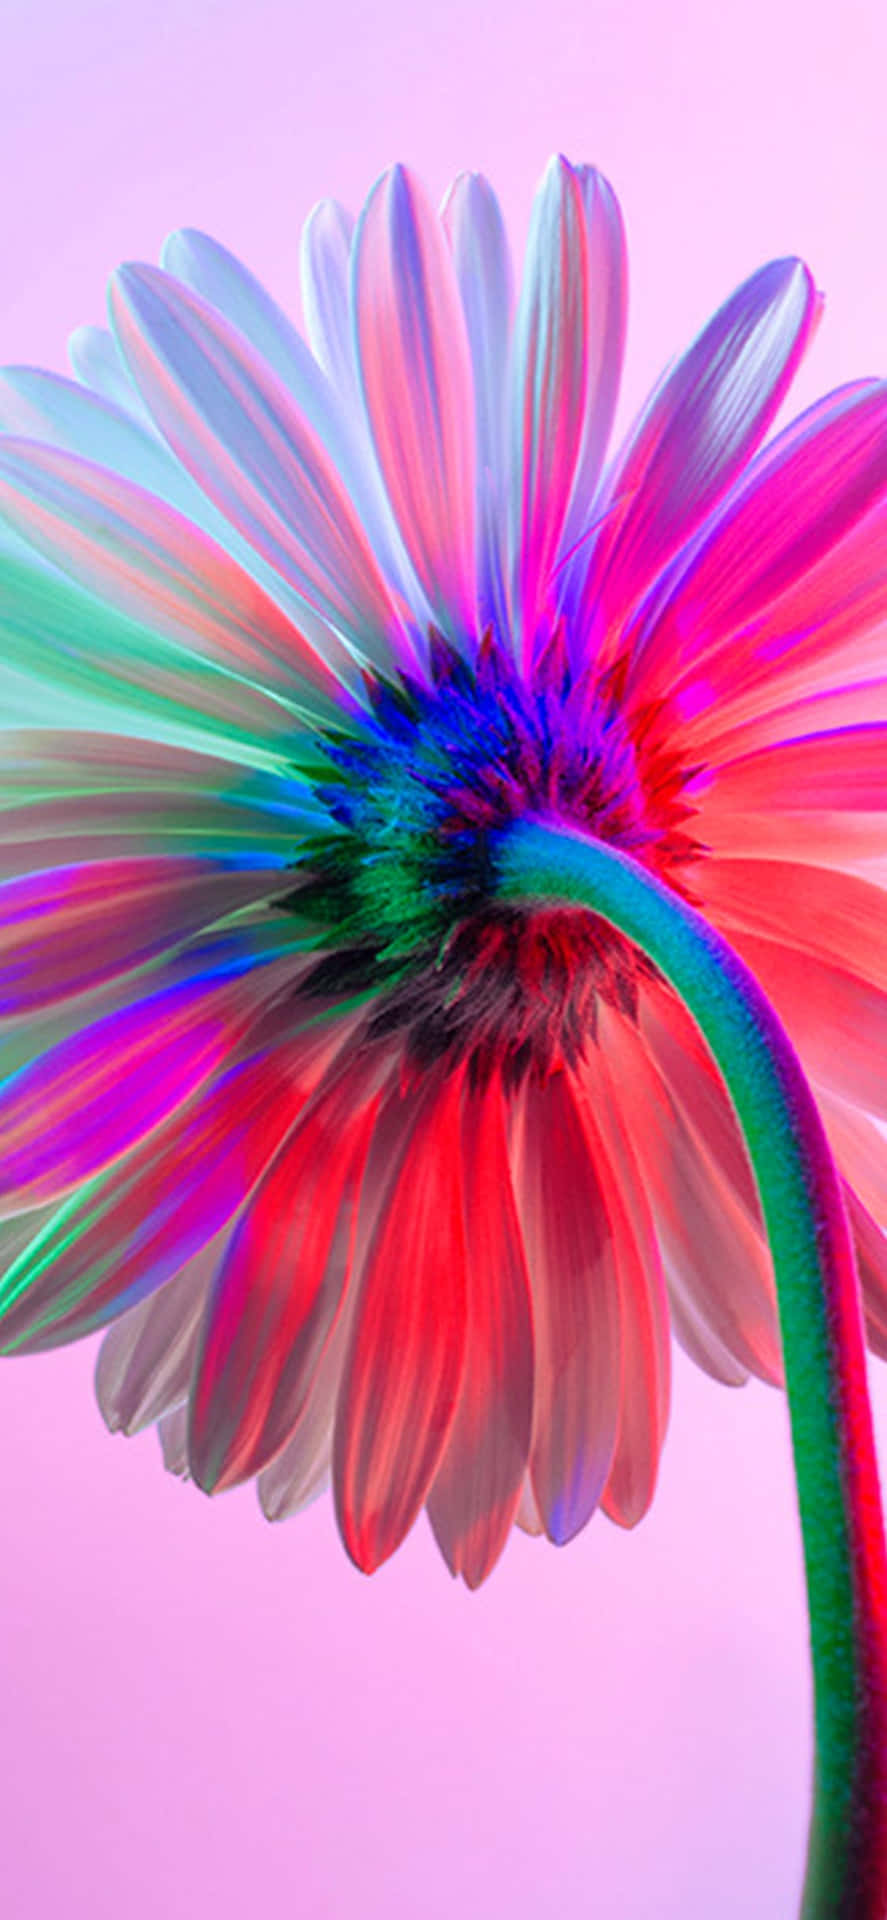 [100+] Rainbow Flower Iphone Wallpapers | Wallpapers.com